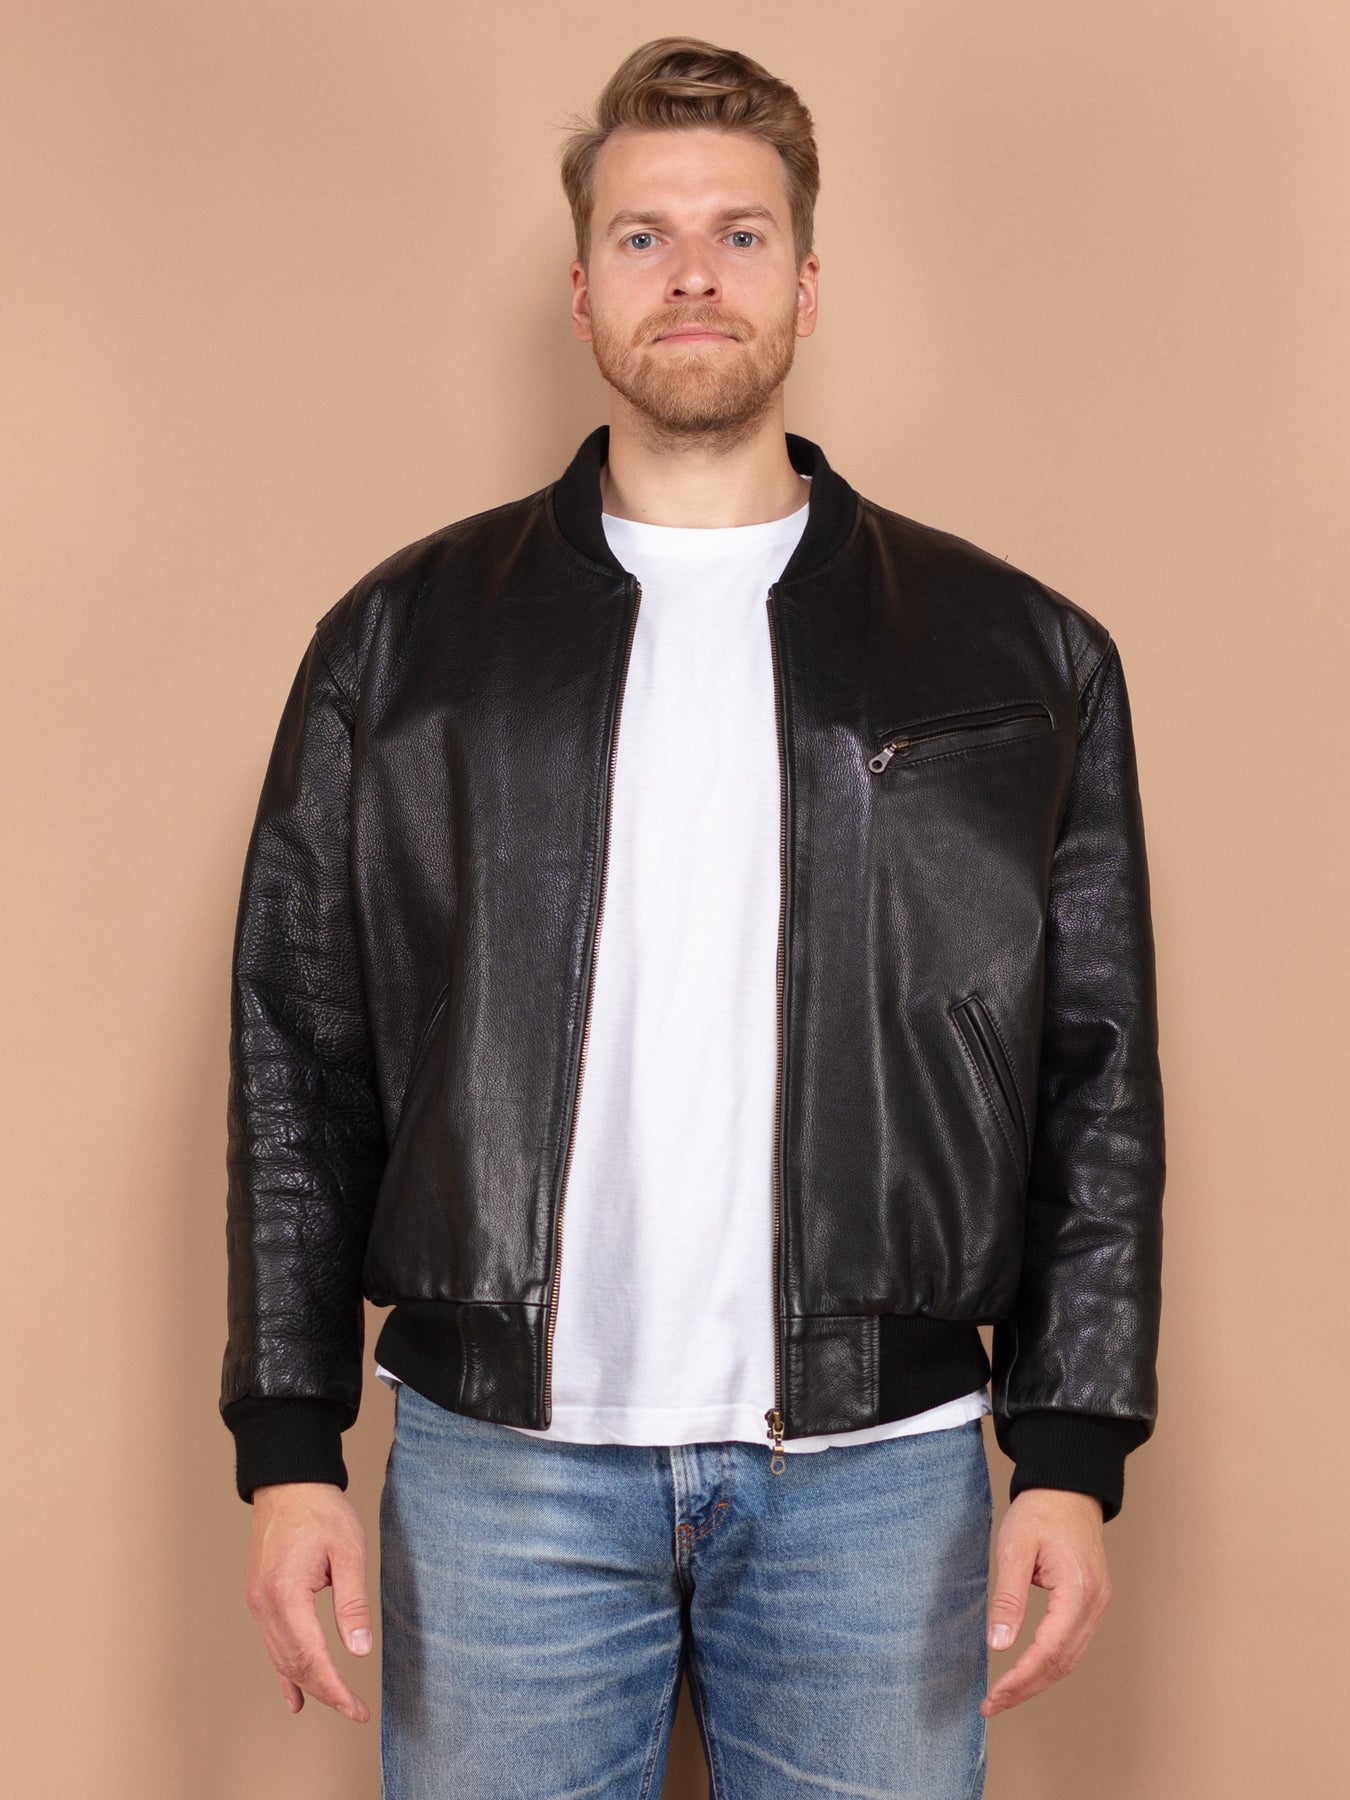 Online Vintage Store | 90's Leather Jacket | Northern Grip